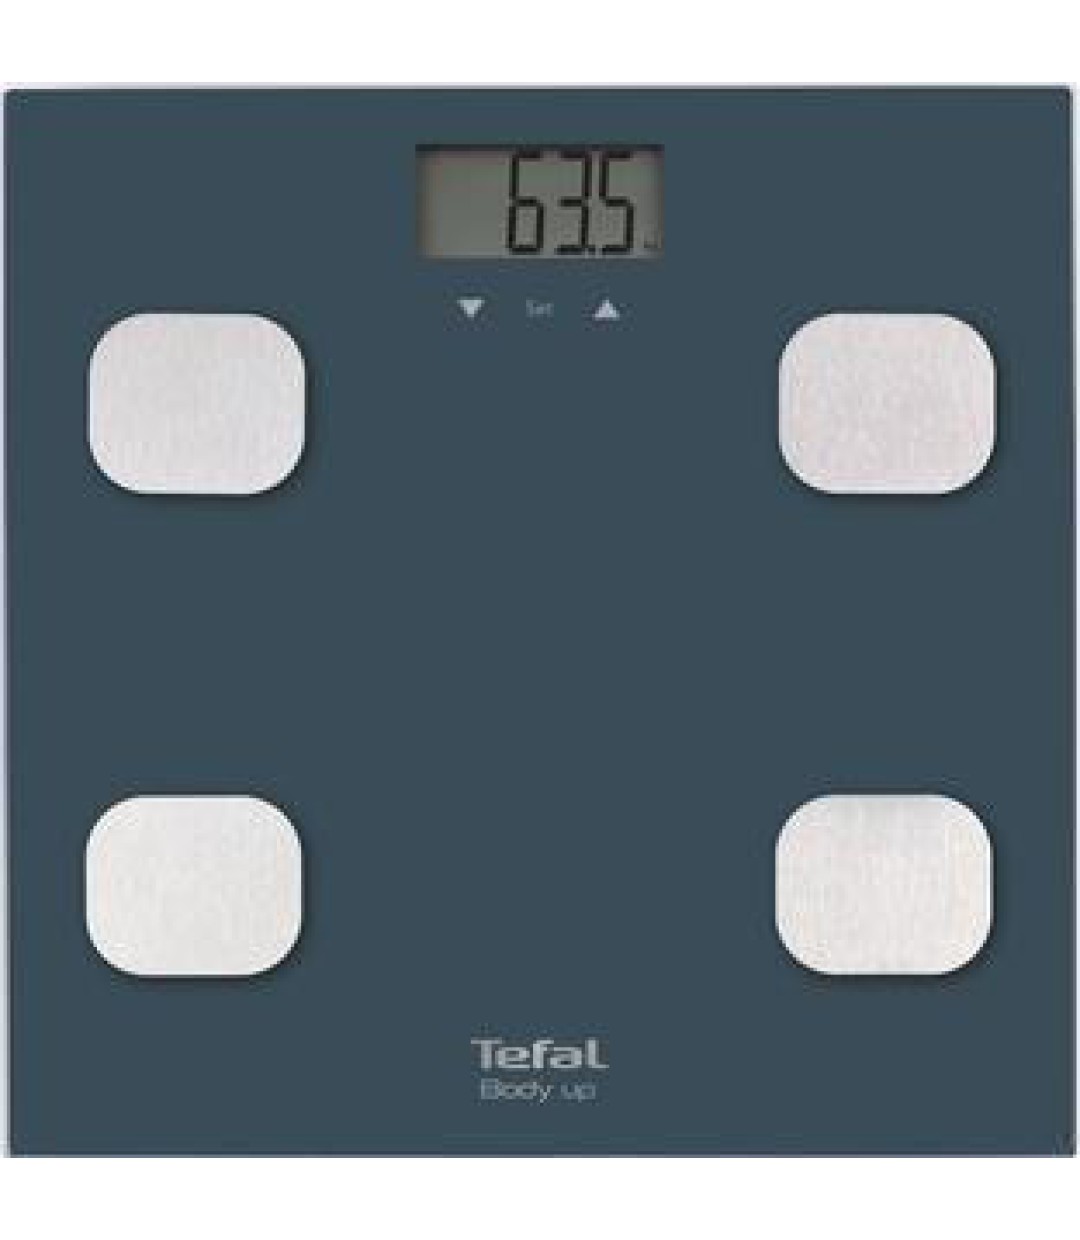 Tefal Body Up Body Fat Scale BM2520